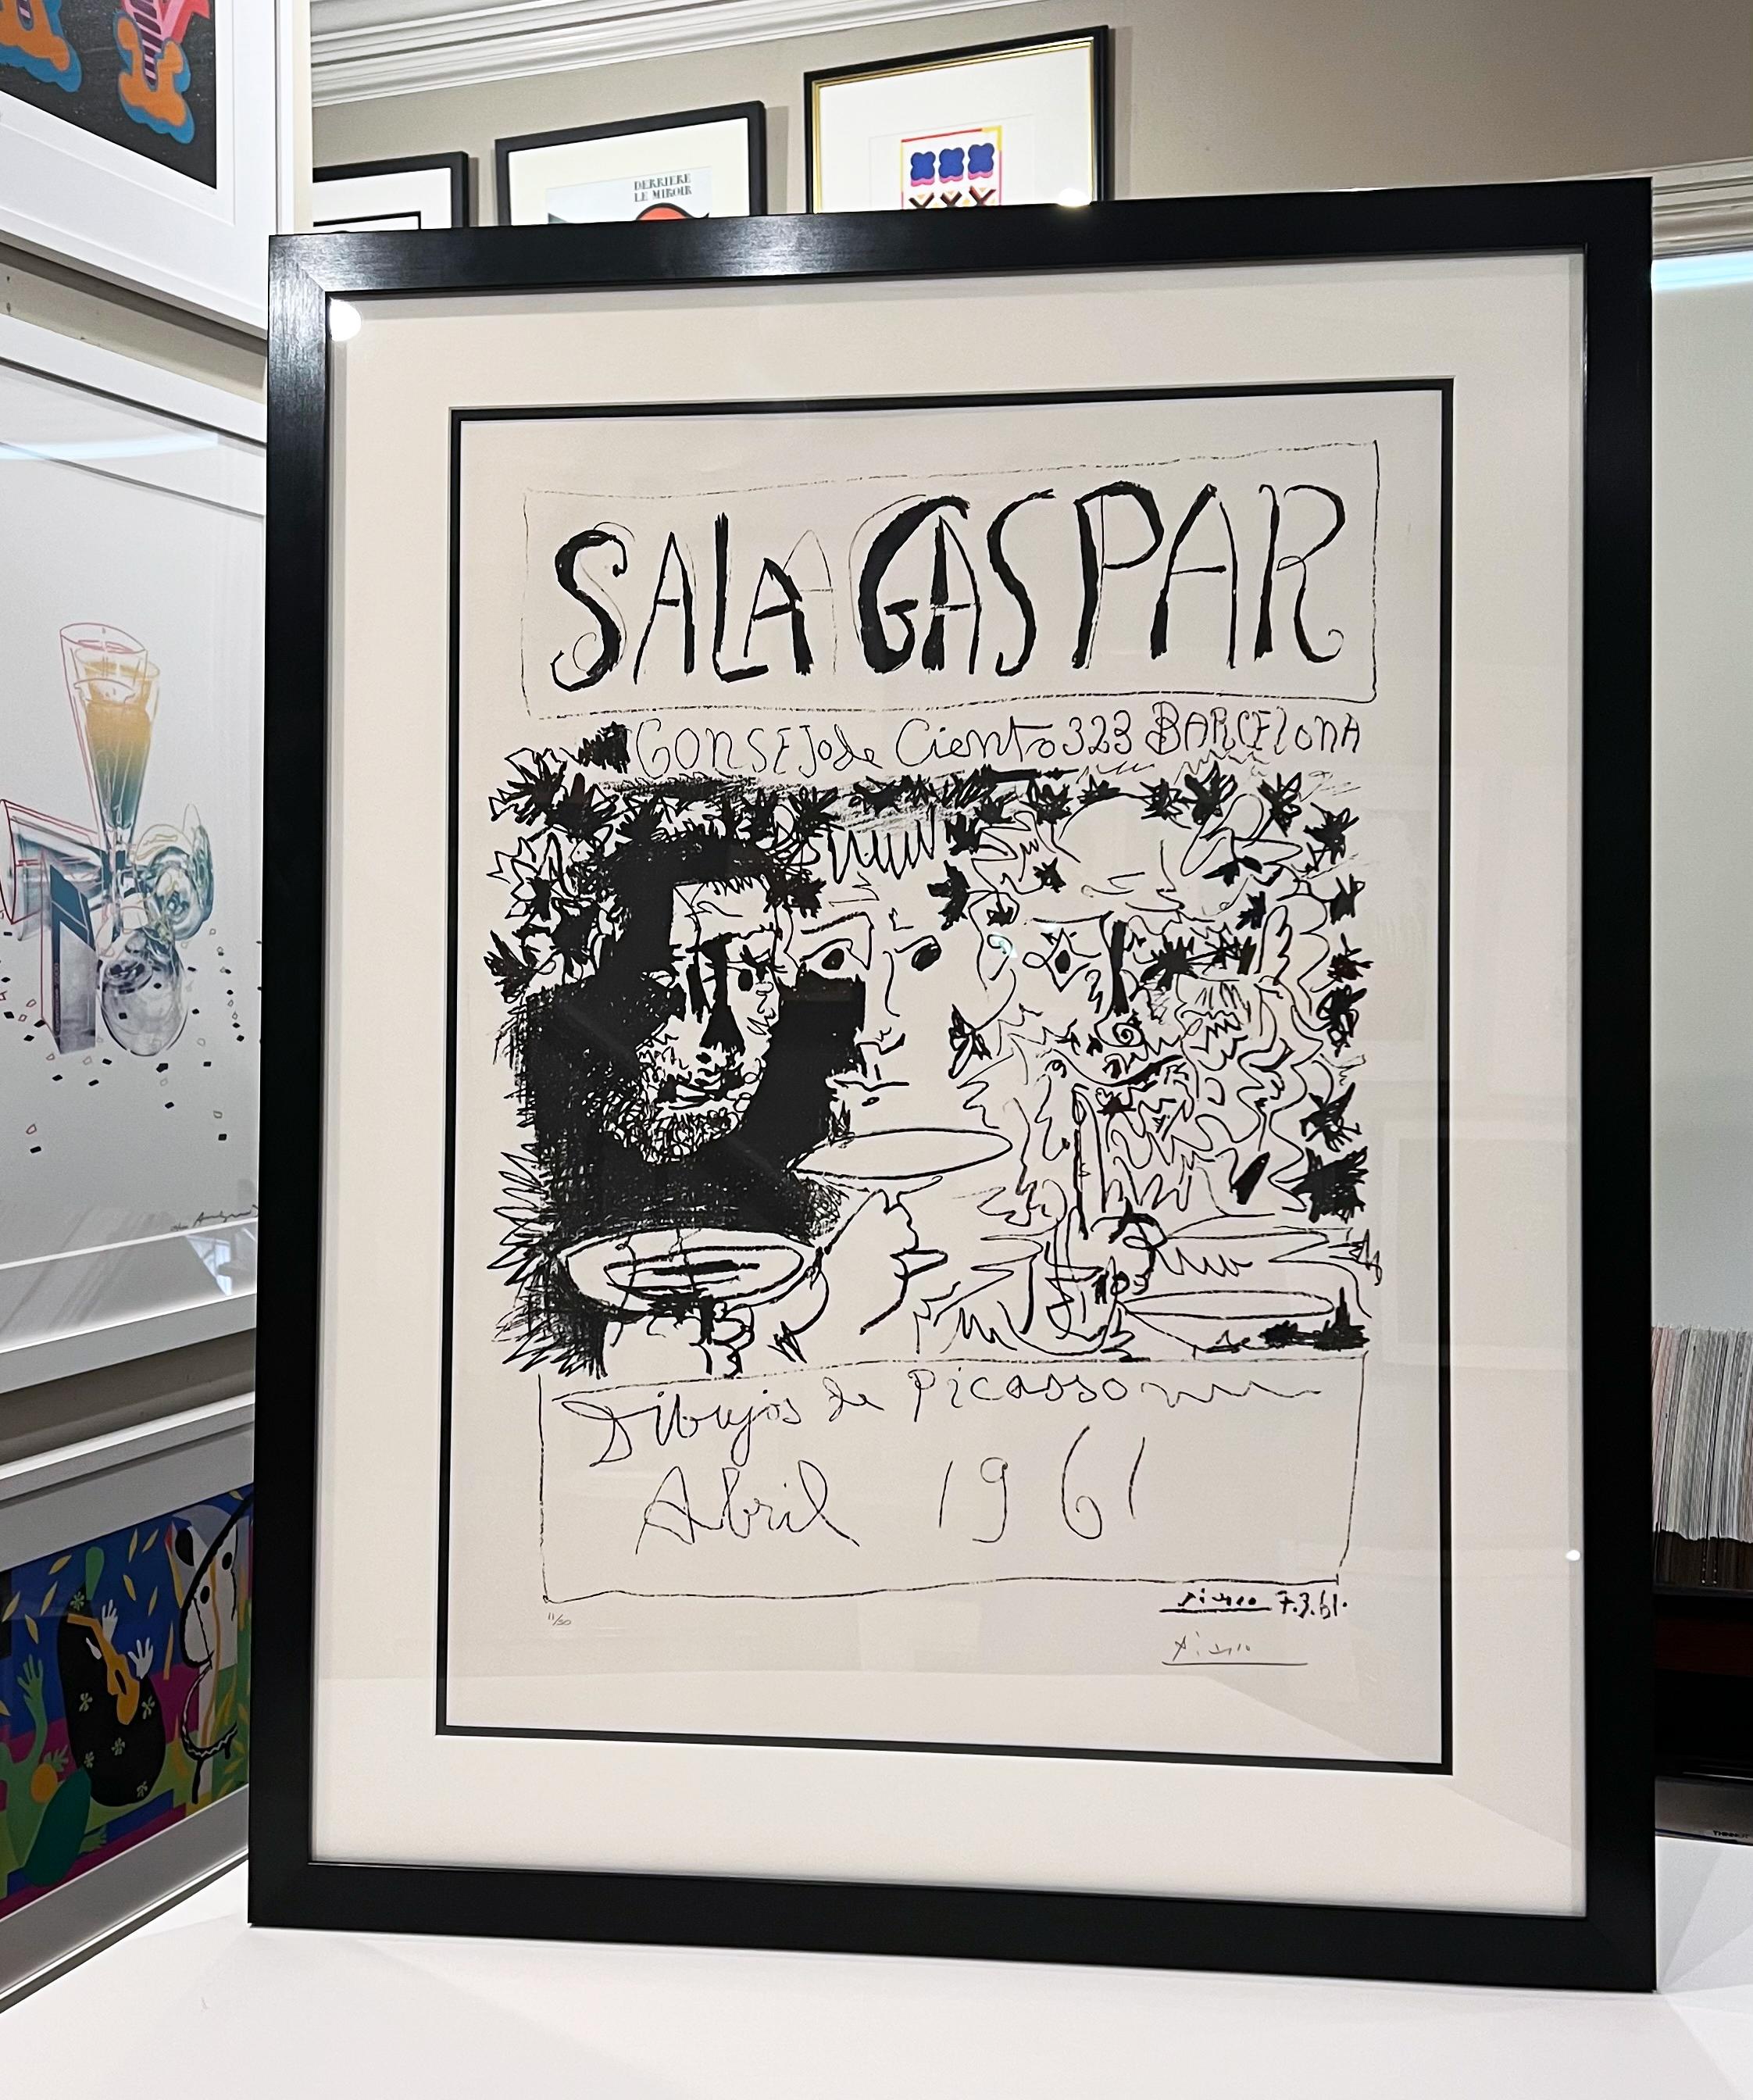 Artist: Pablo Picasso
Title: Sala Gaspar, Barcelona 1961
Medium: Original lithograph
Date: 1961
Edition: 11/50
Frame Size: 42